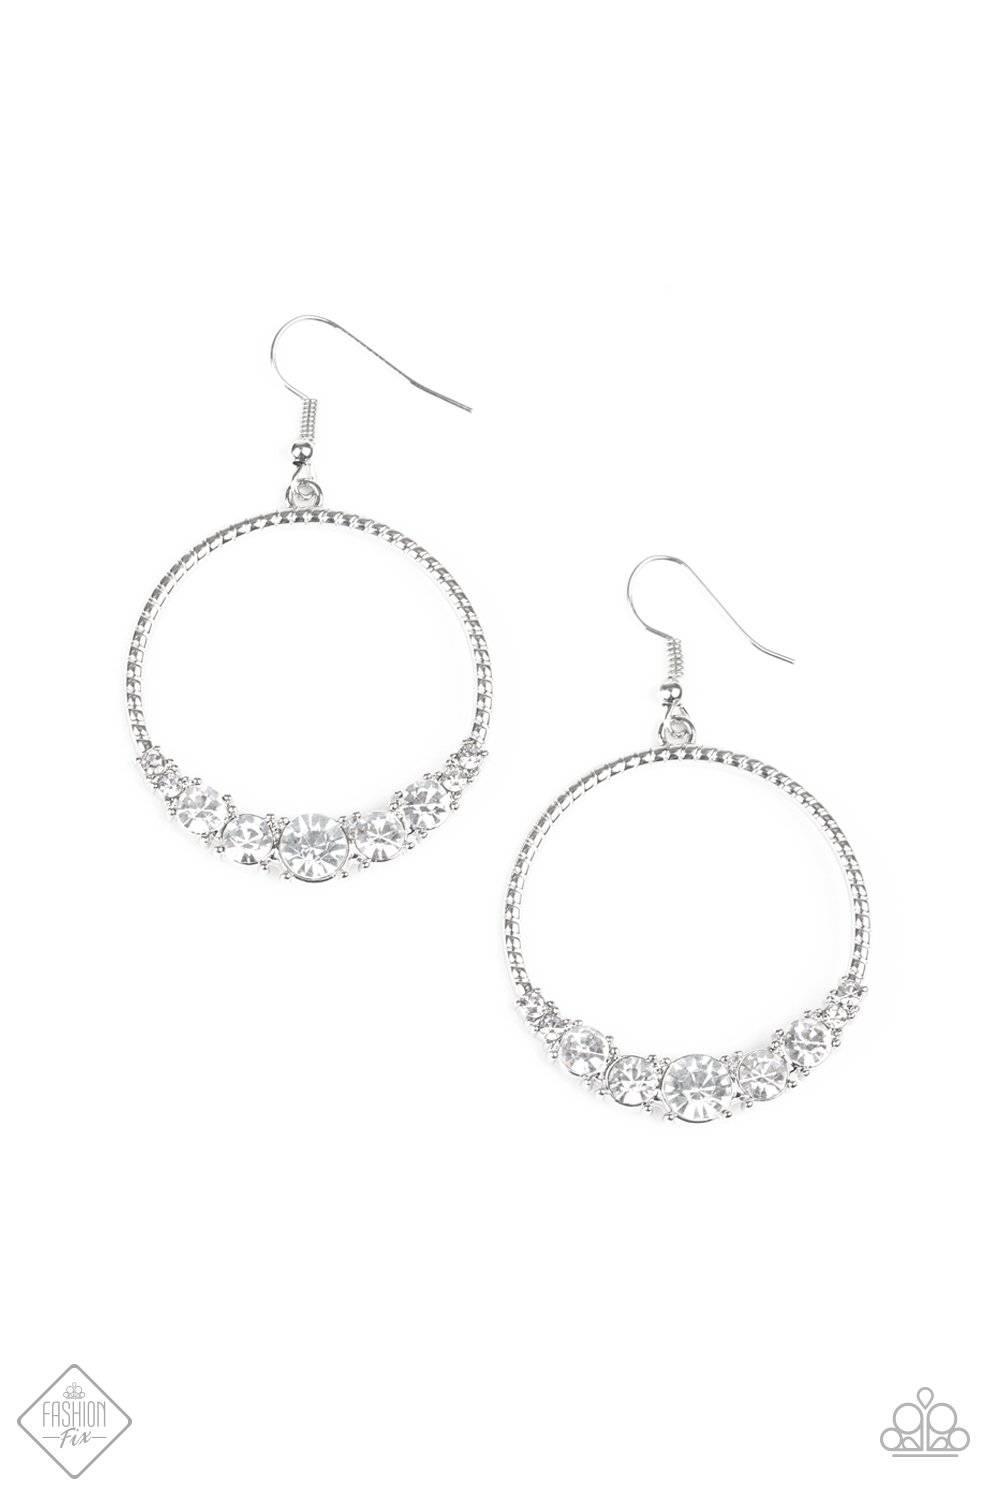 Self-Made Millionaire - White Rhinestone Earrings - Paparazzi Accessories - GlaMarous Titi Jewels